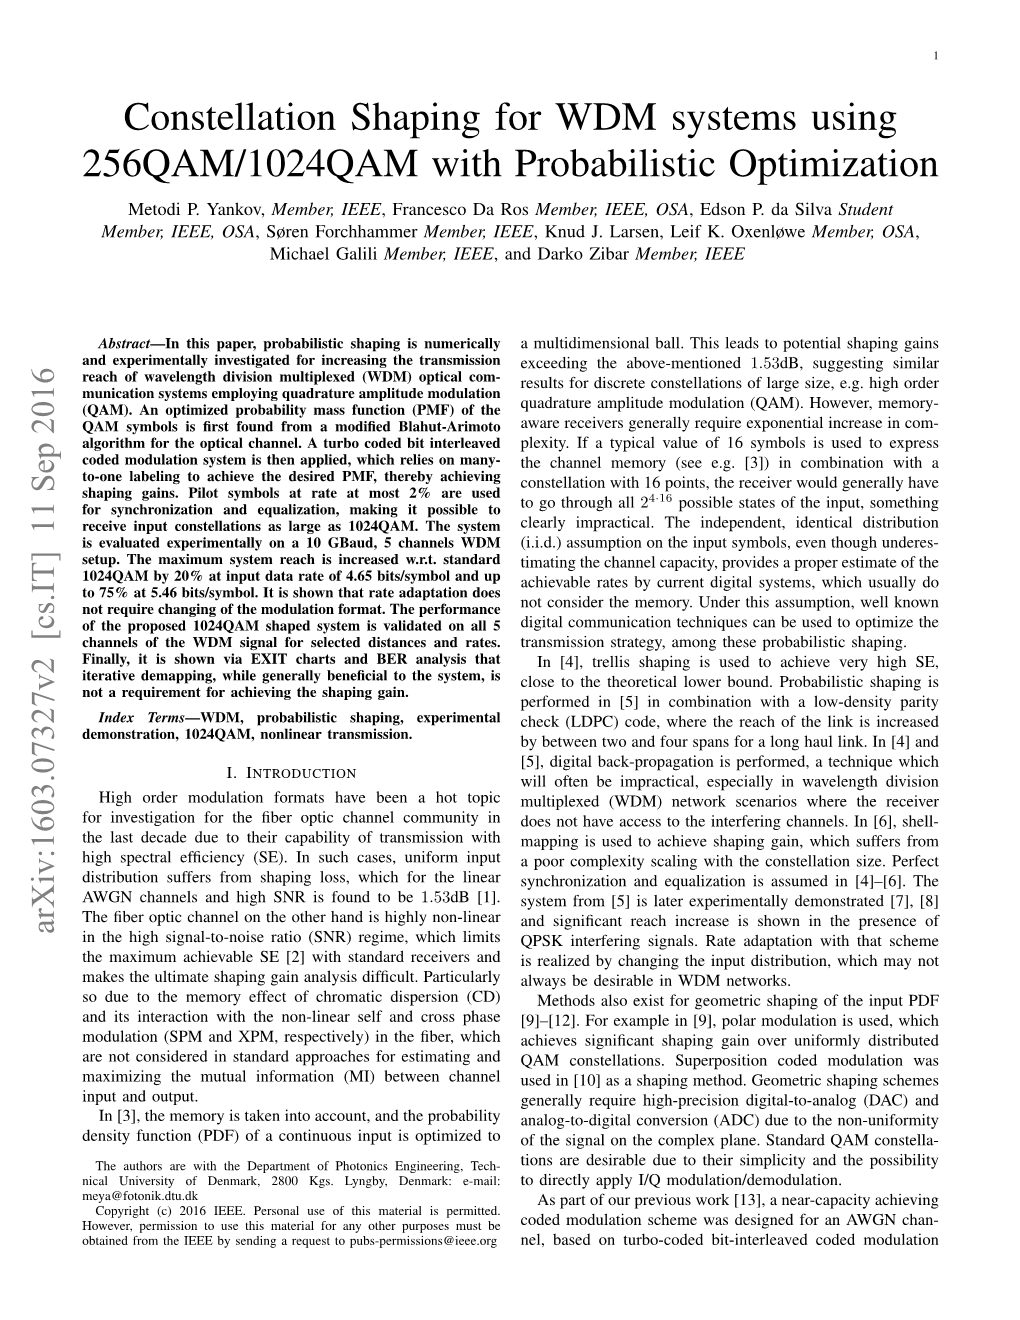 Constellation Shaping for WDM Systems Using 256QAM/1024QAM with Probabilistic Optimization Metodi P